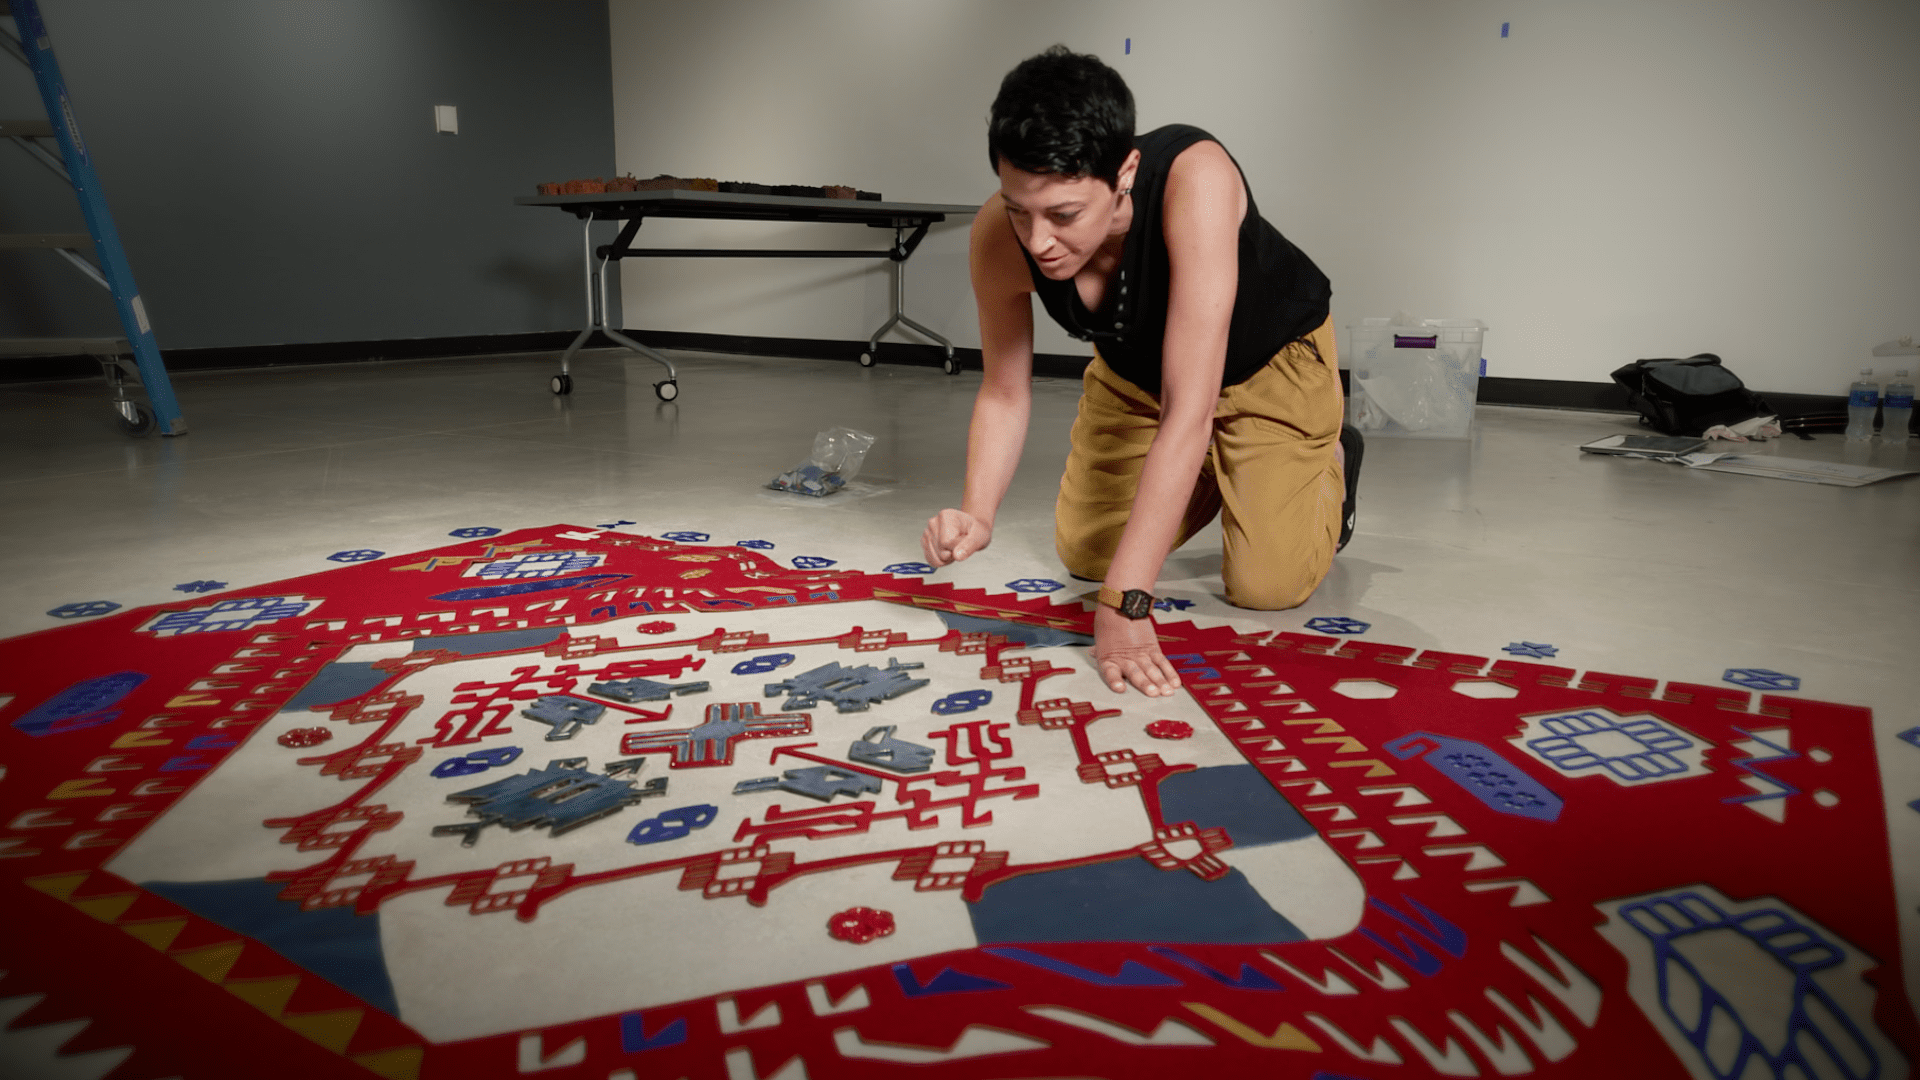 Jessica Sperandio assembling art at the Stockton University Art Gallery